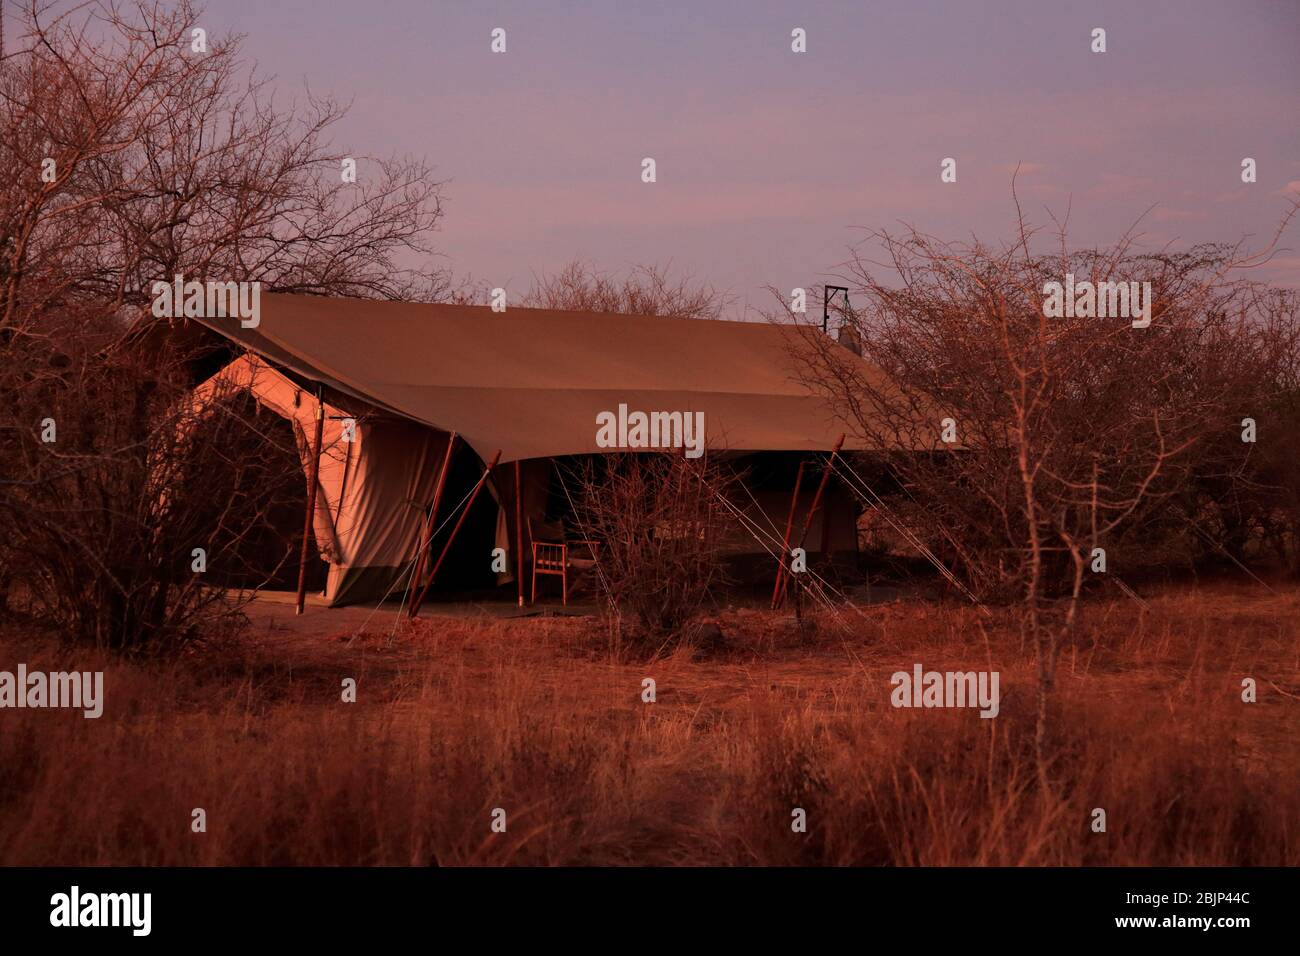 Safari tent at dawn in the African bush Stock Photo